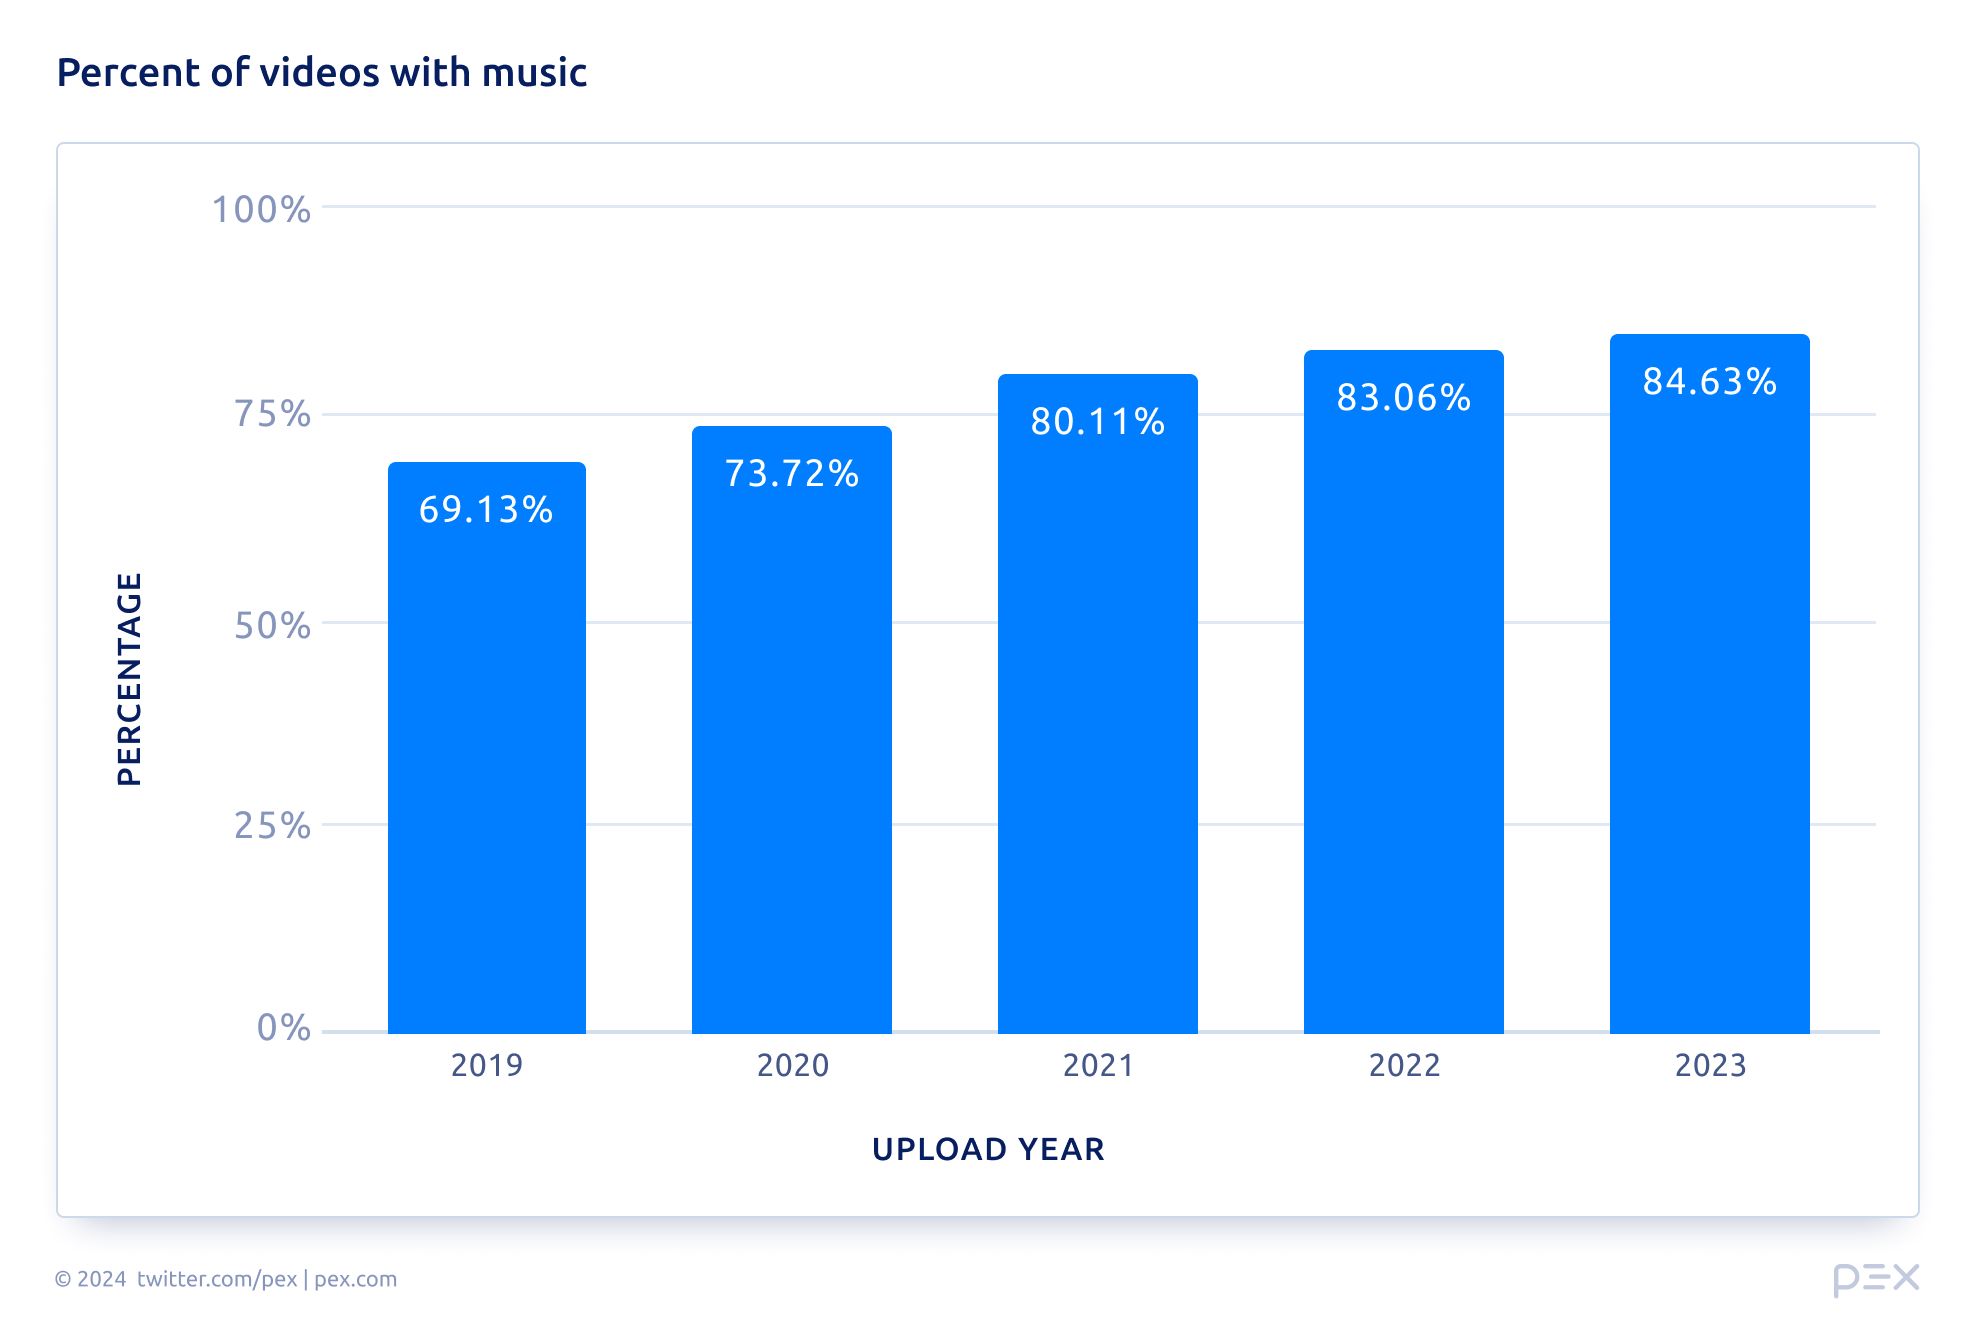 Percent of videos on TikTok with music